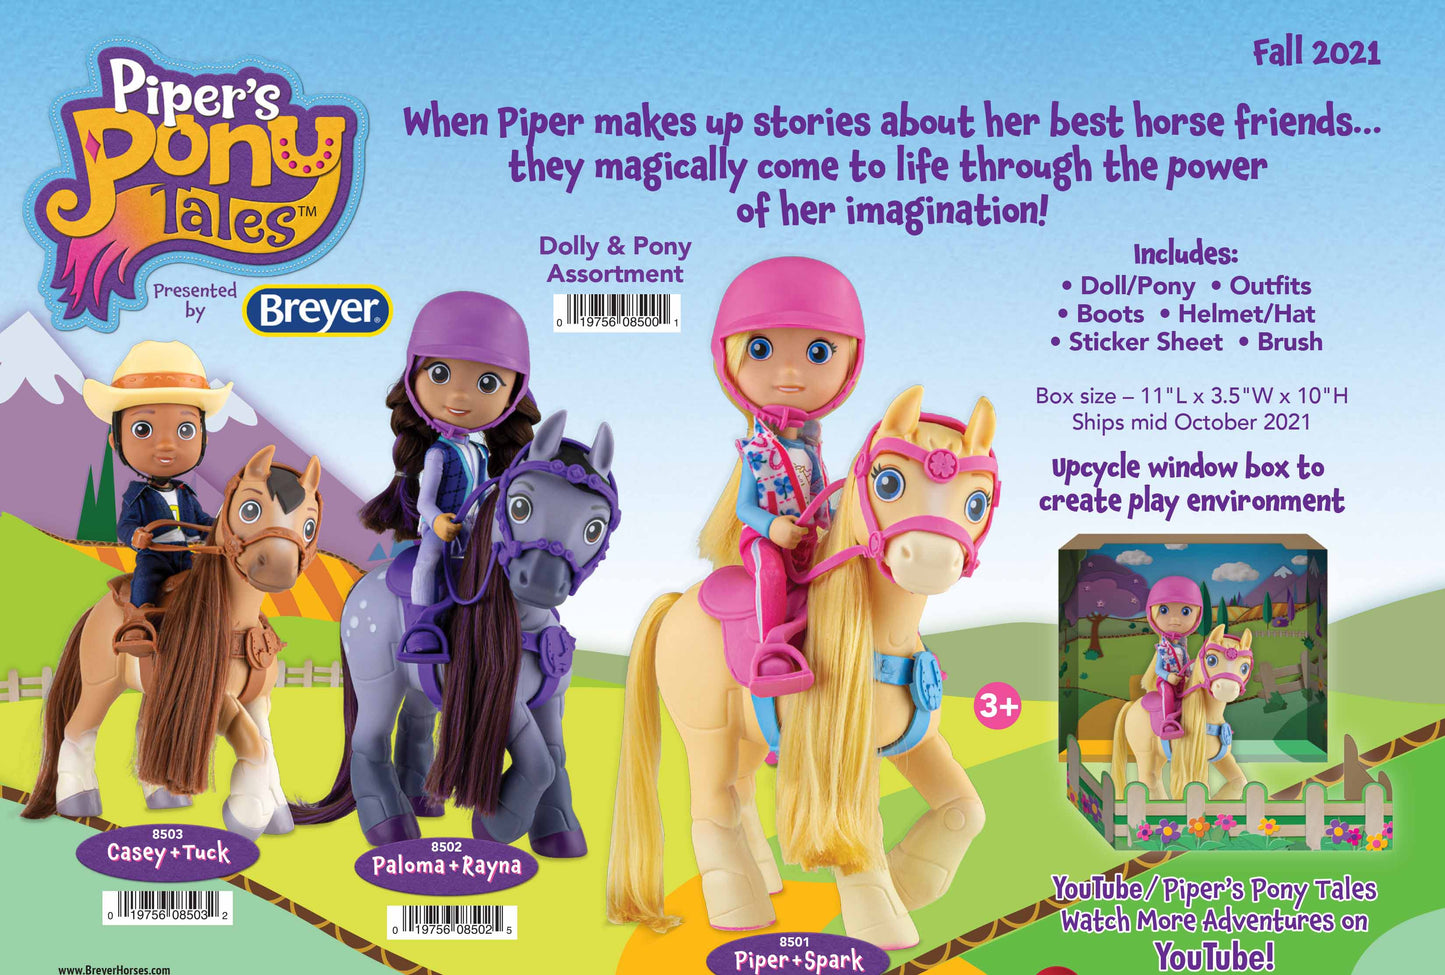 Breyer Piper's Ponies